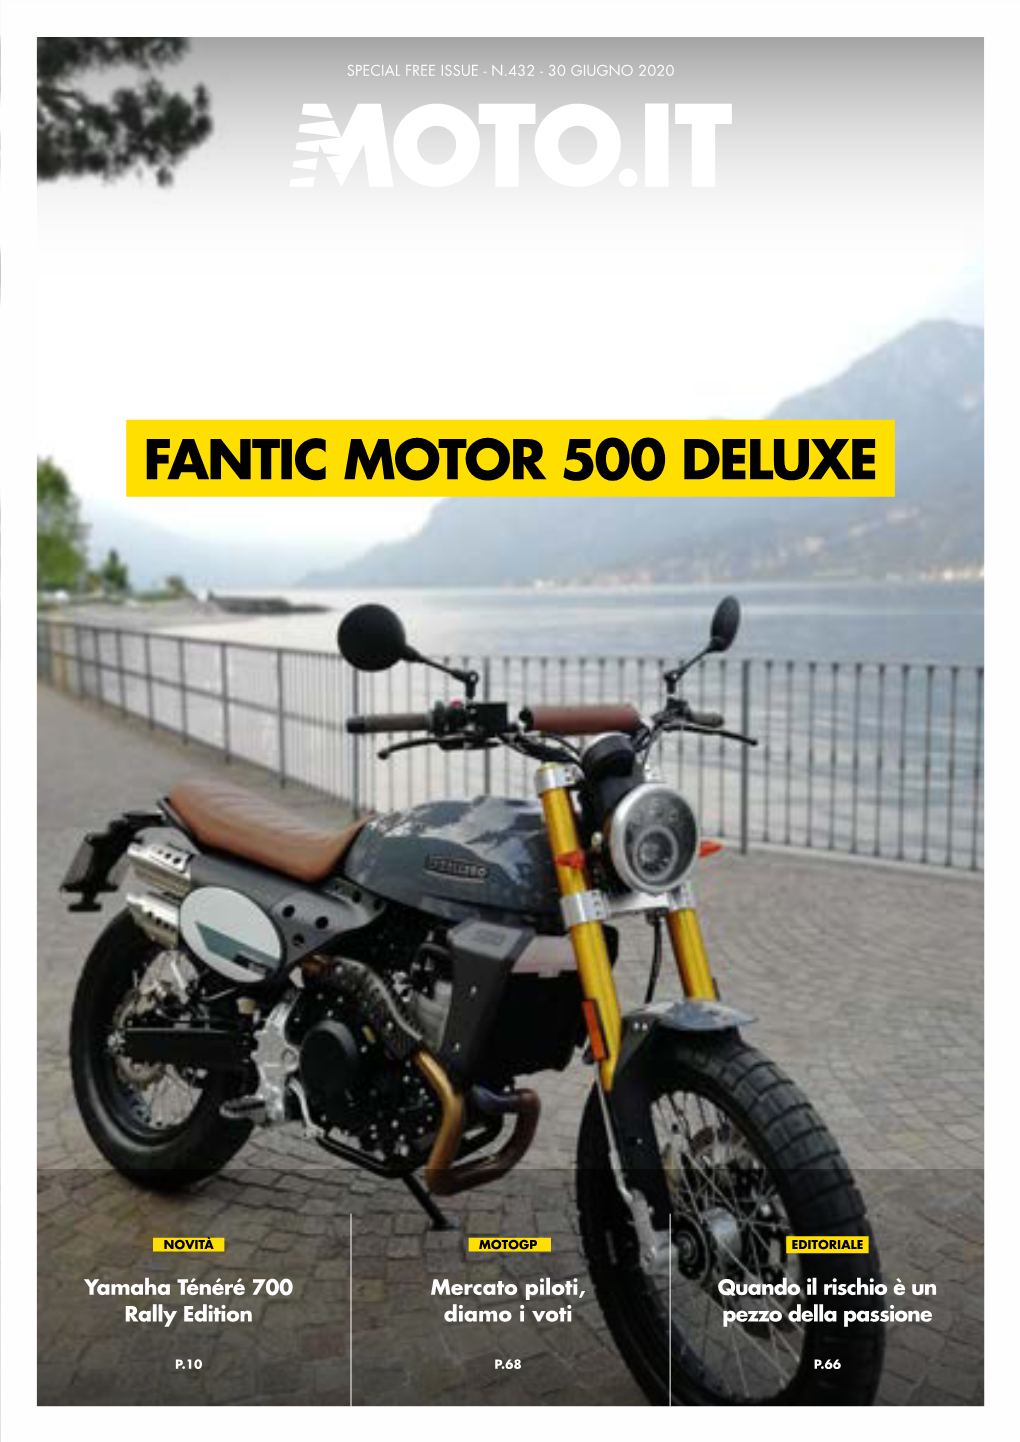 Fantic Motor 500 Deluxe